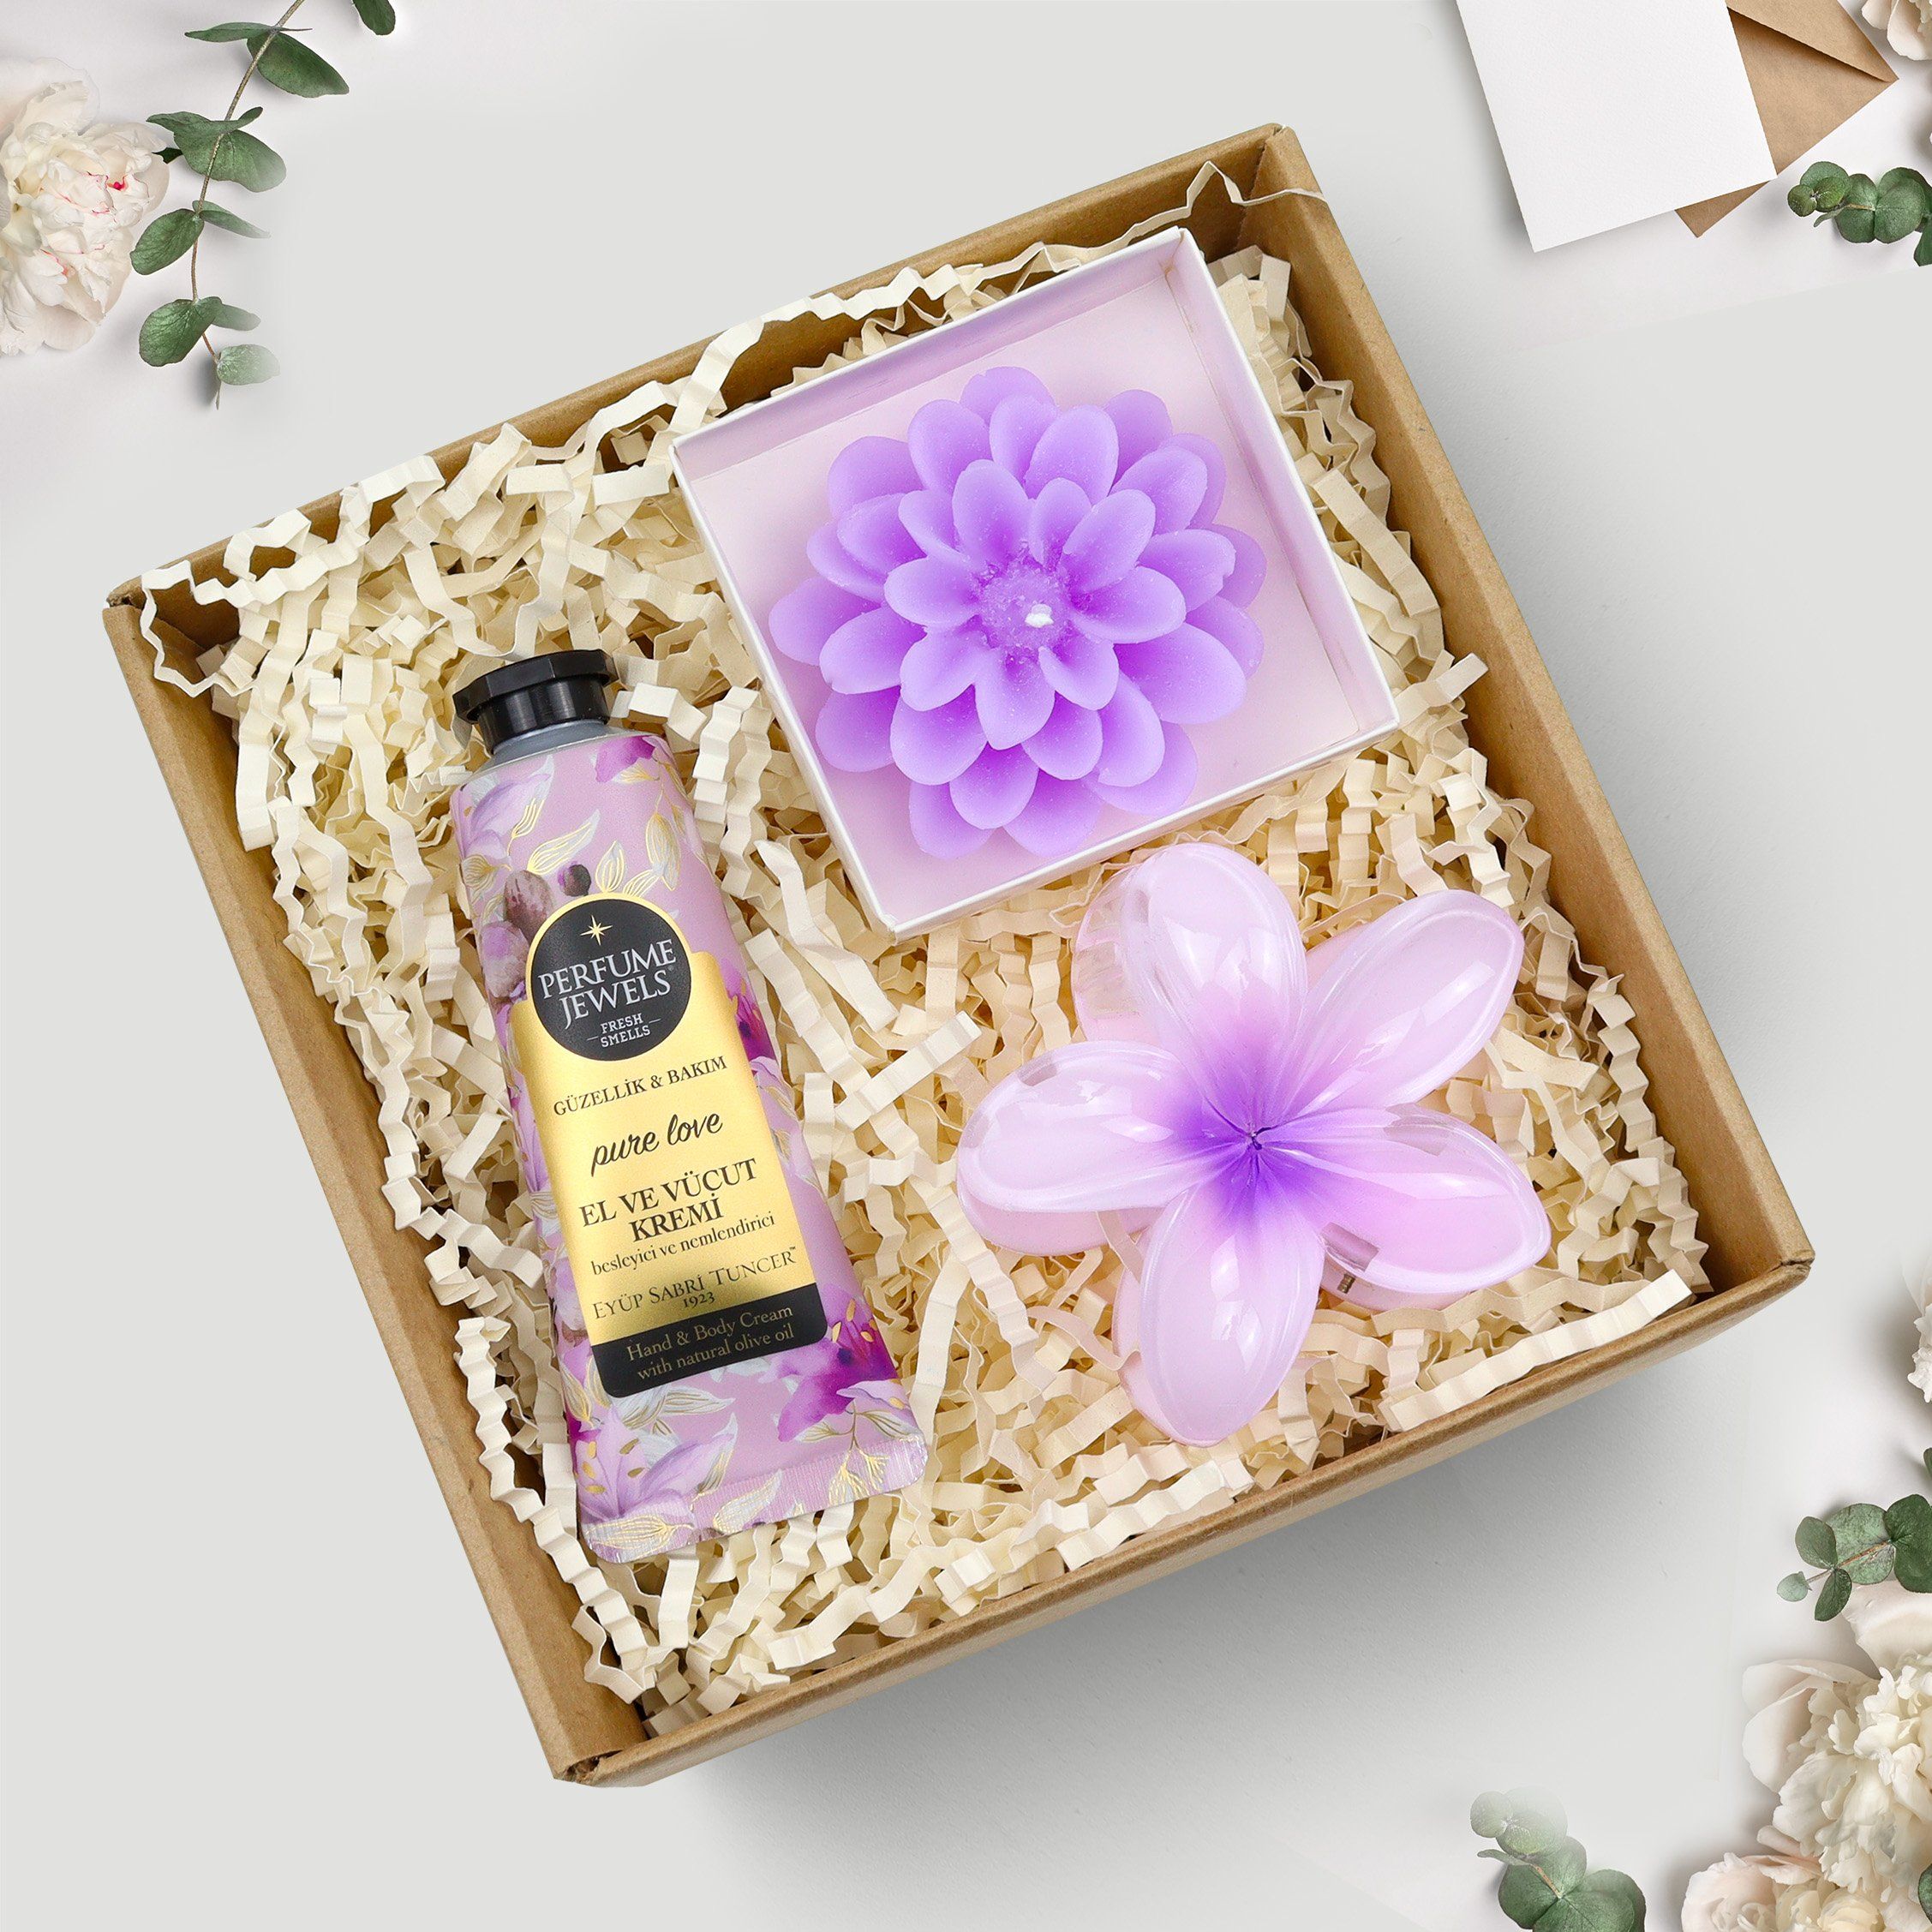 Lotus Toka & Lotus Çiçeği Mum & Eyüp Sabri Tuncer El Kremi Hediye Seti #1